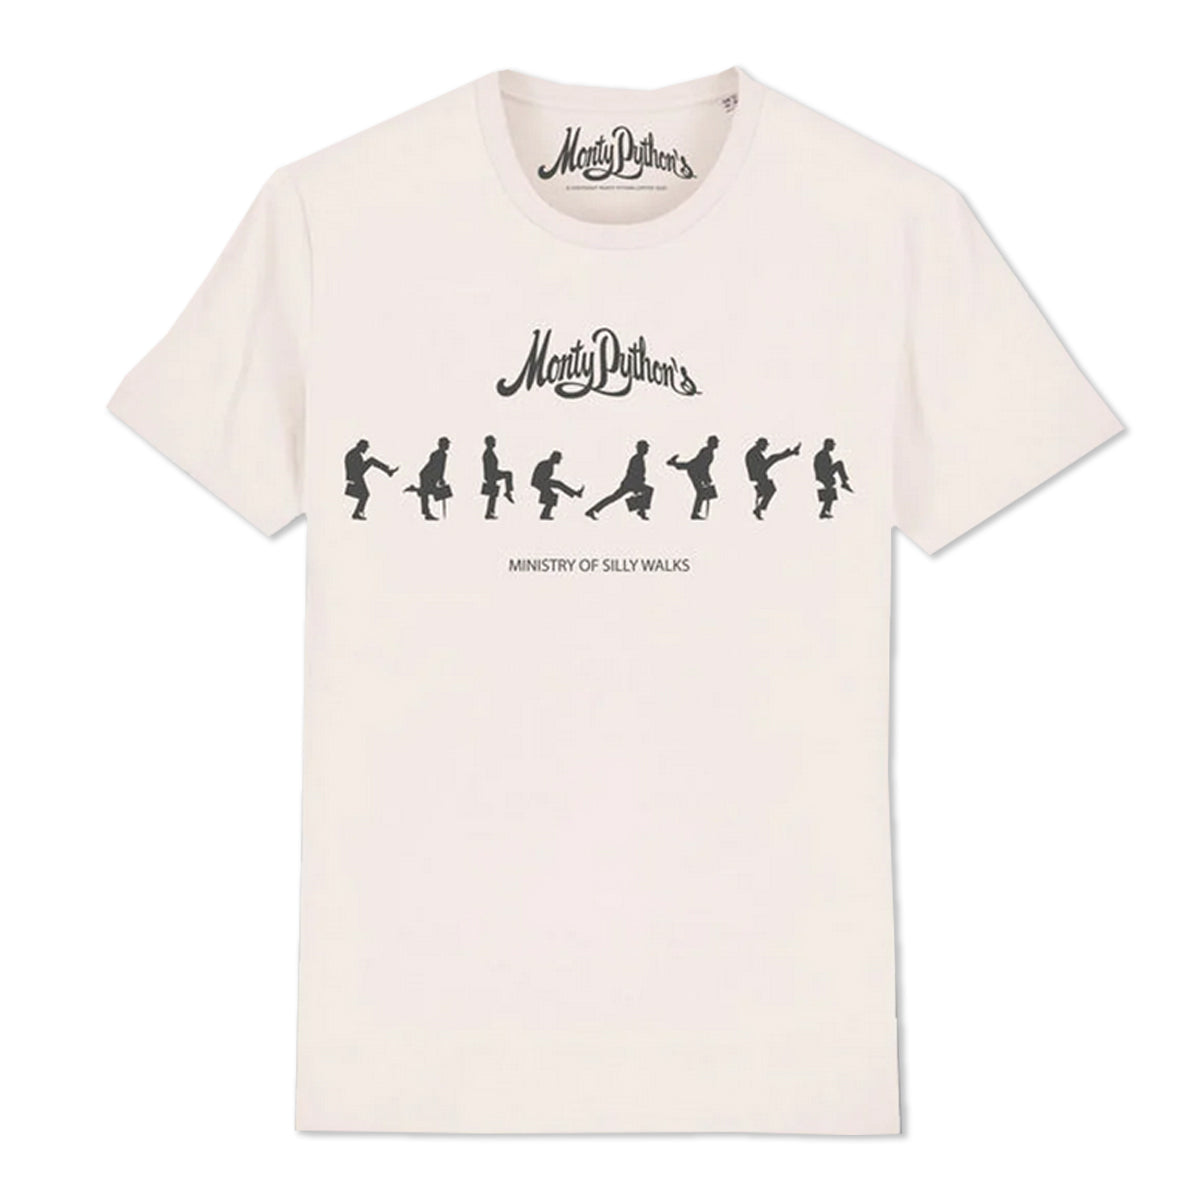 Monty Python - Ministry Of Silly walks T-Shirt Vintage White